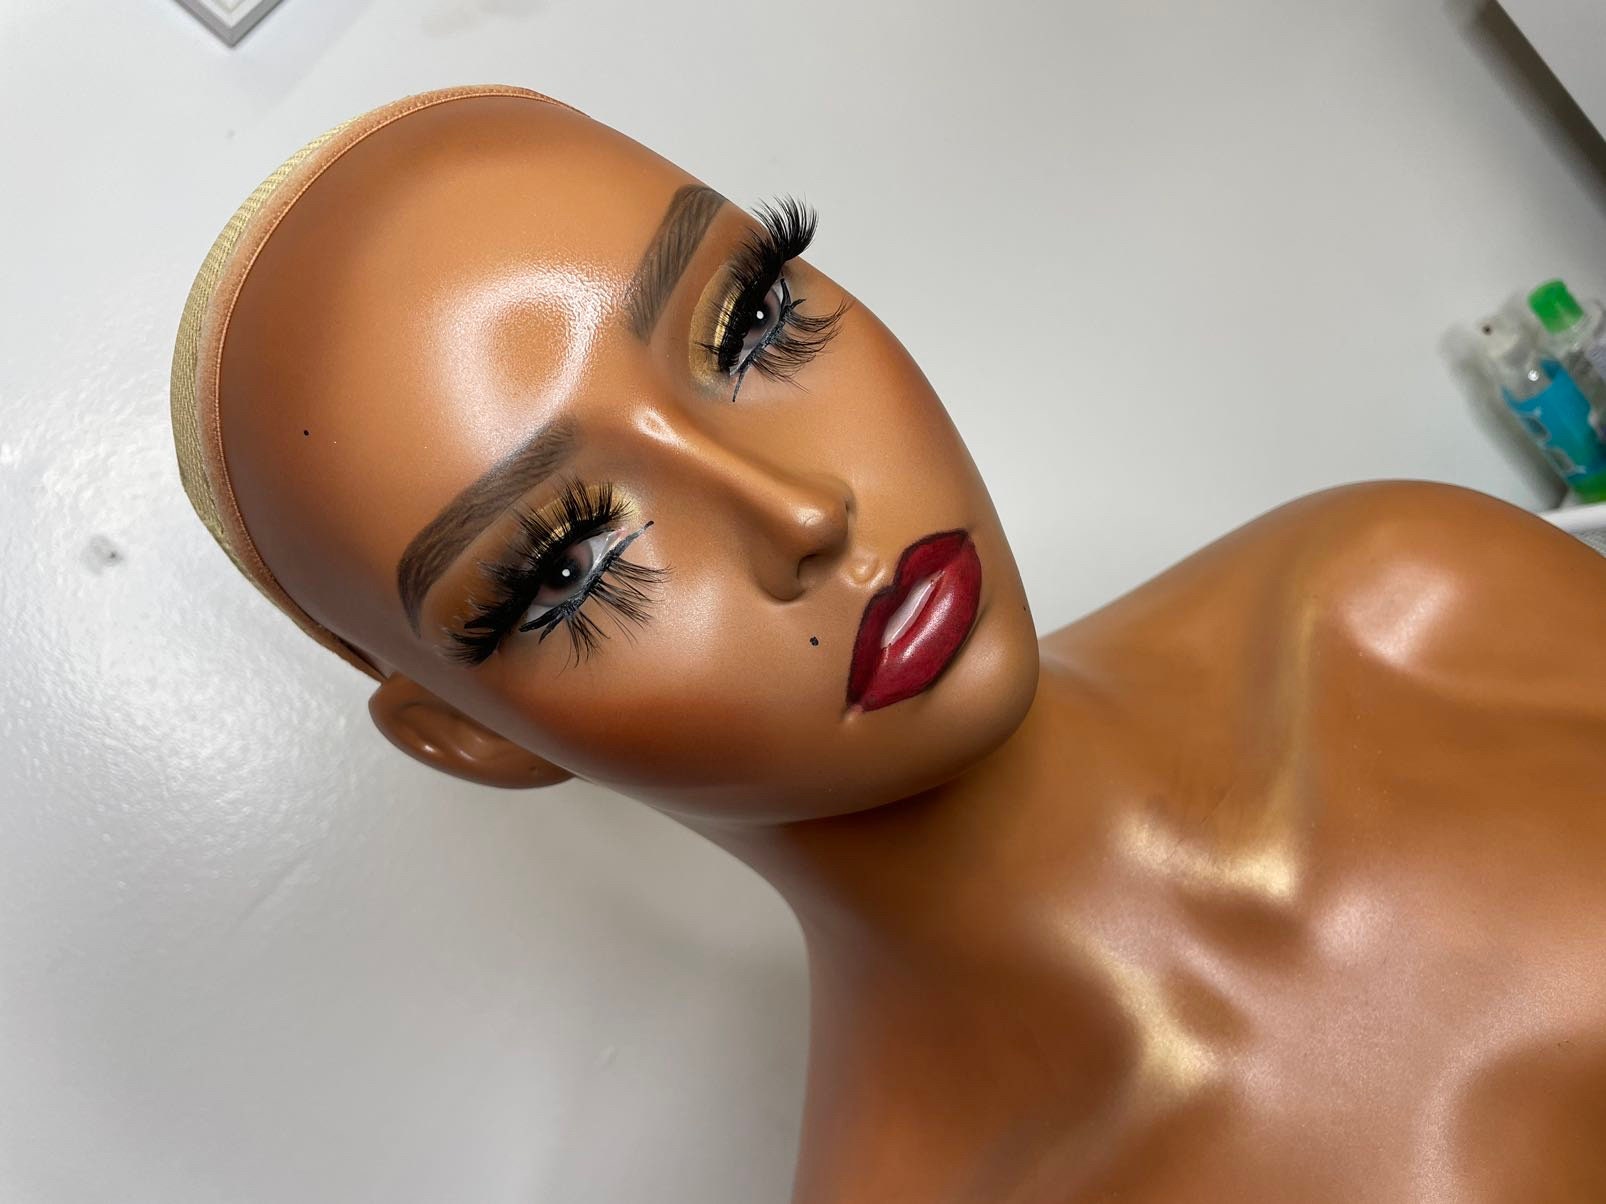 Generic Dummy Wig Head Mannequin Doll Baby Head + Free Wig Cap